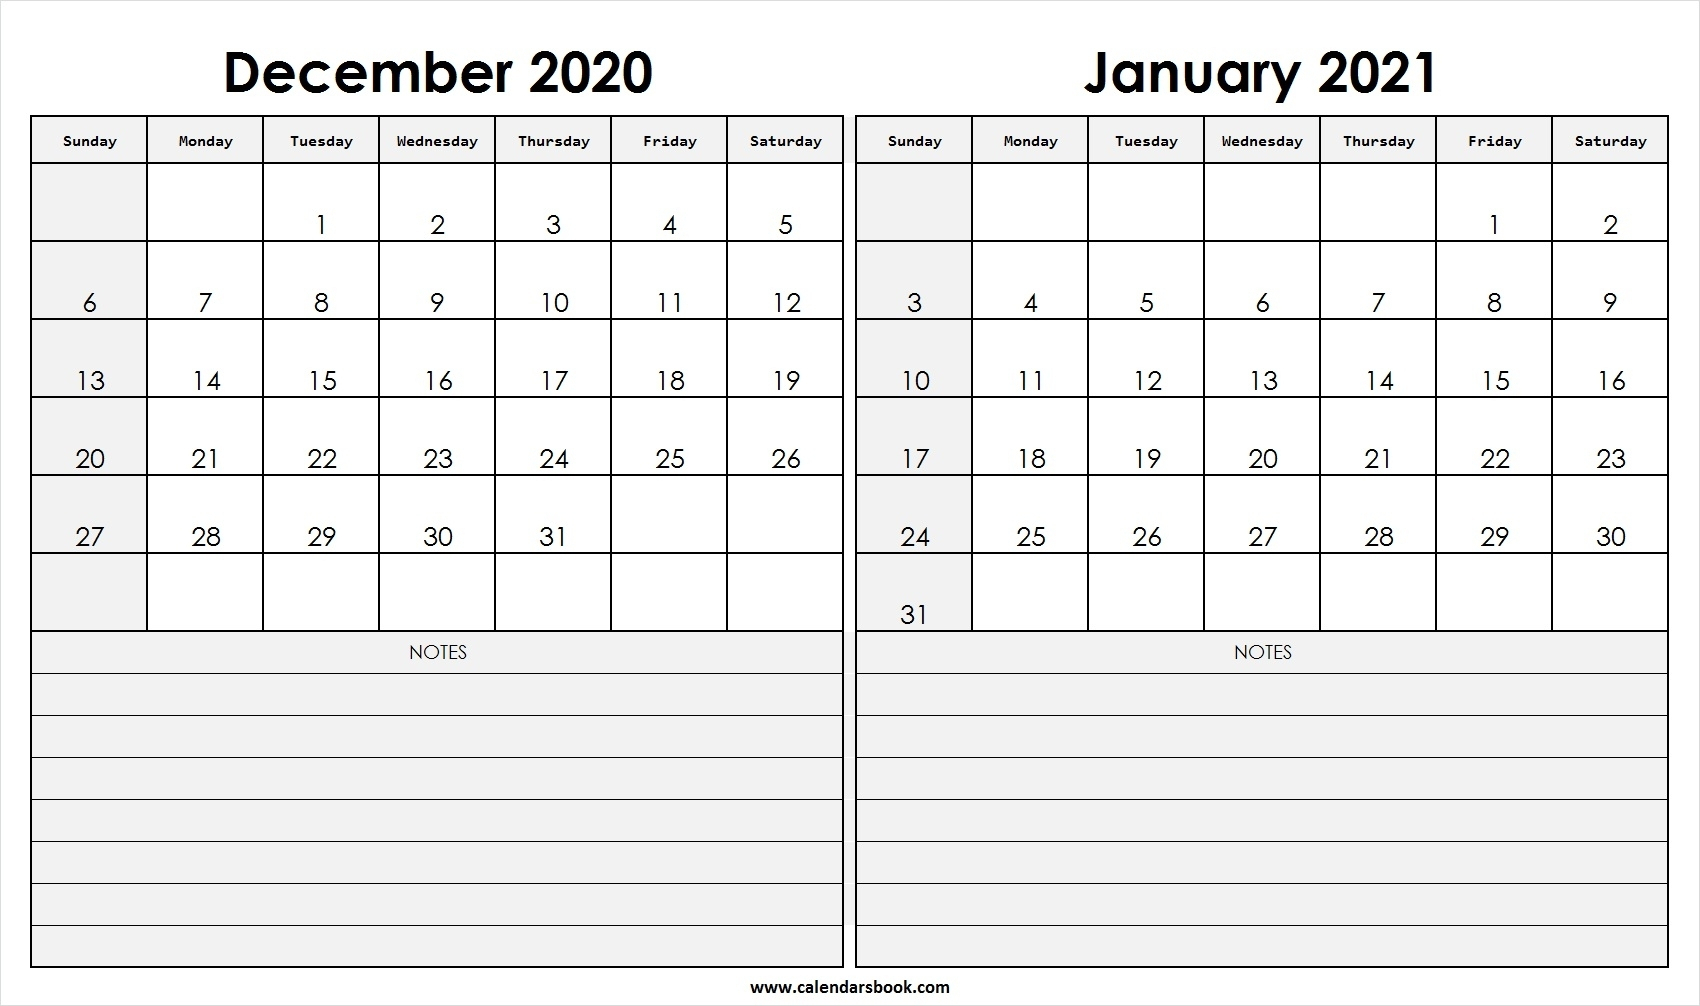 2021 calendar december january 2020 avnitasoni